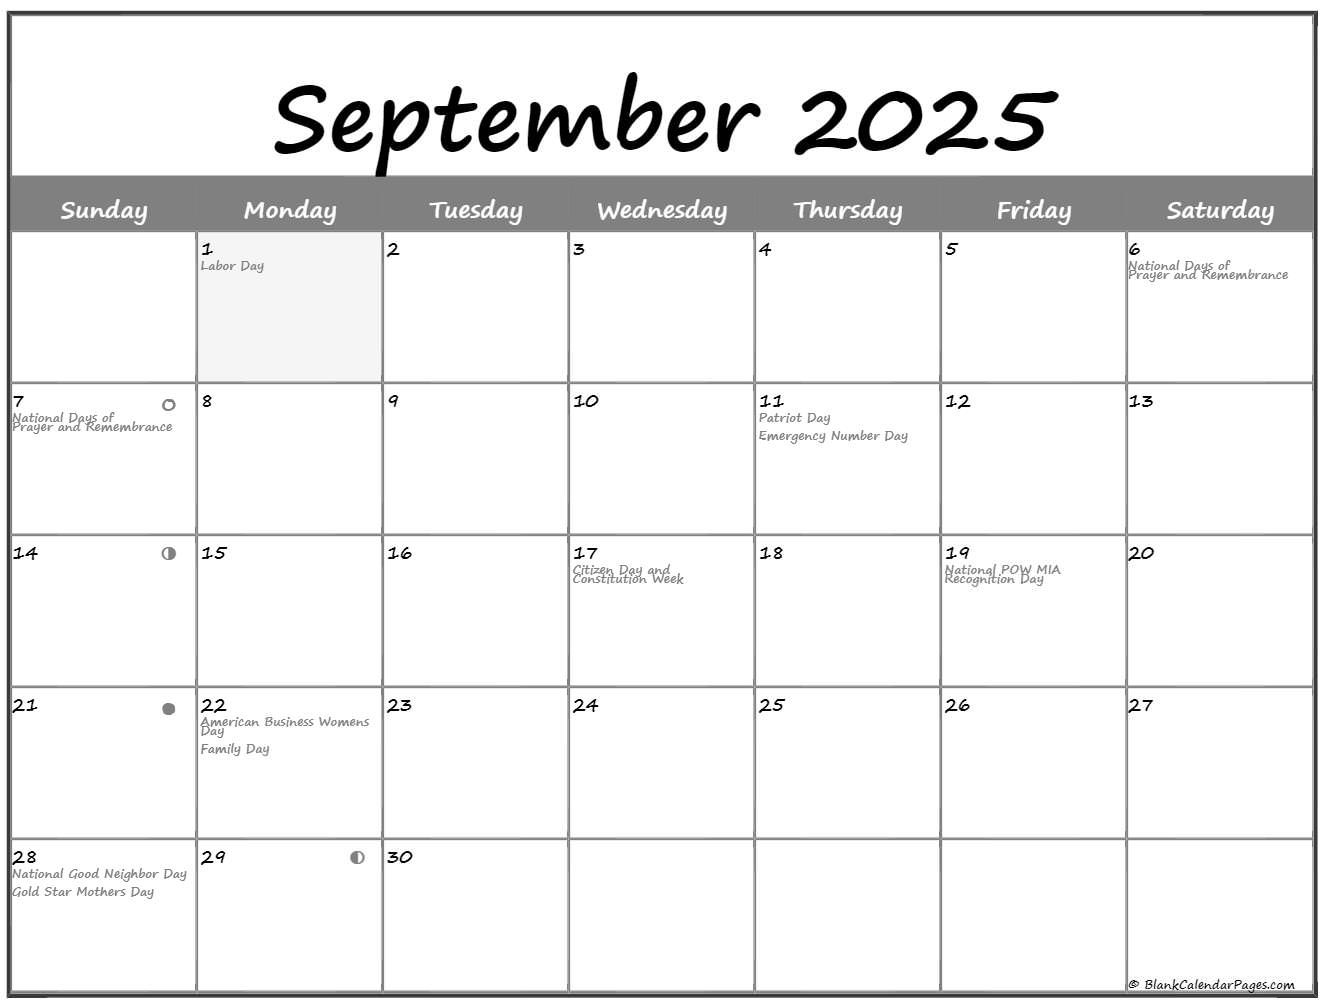 september-2025-lunar-calendar-moon-phase-calendar